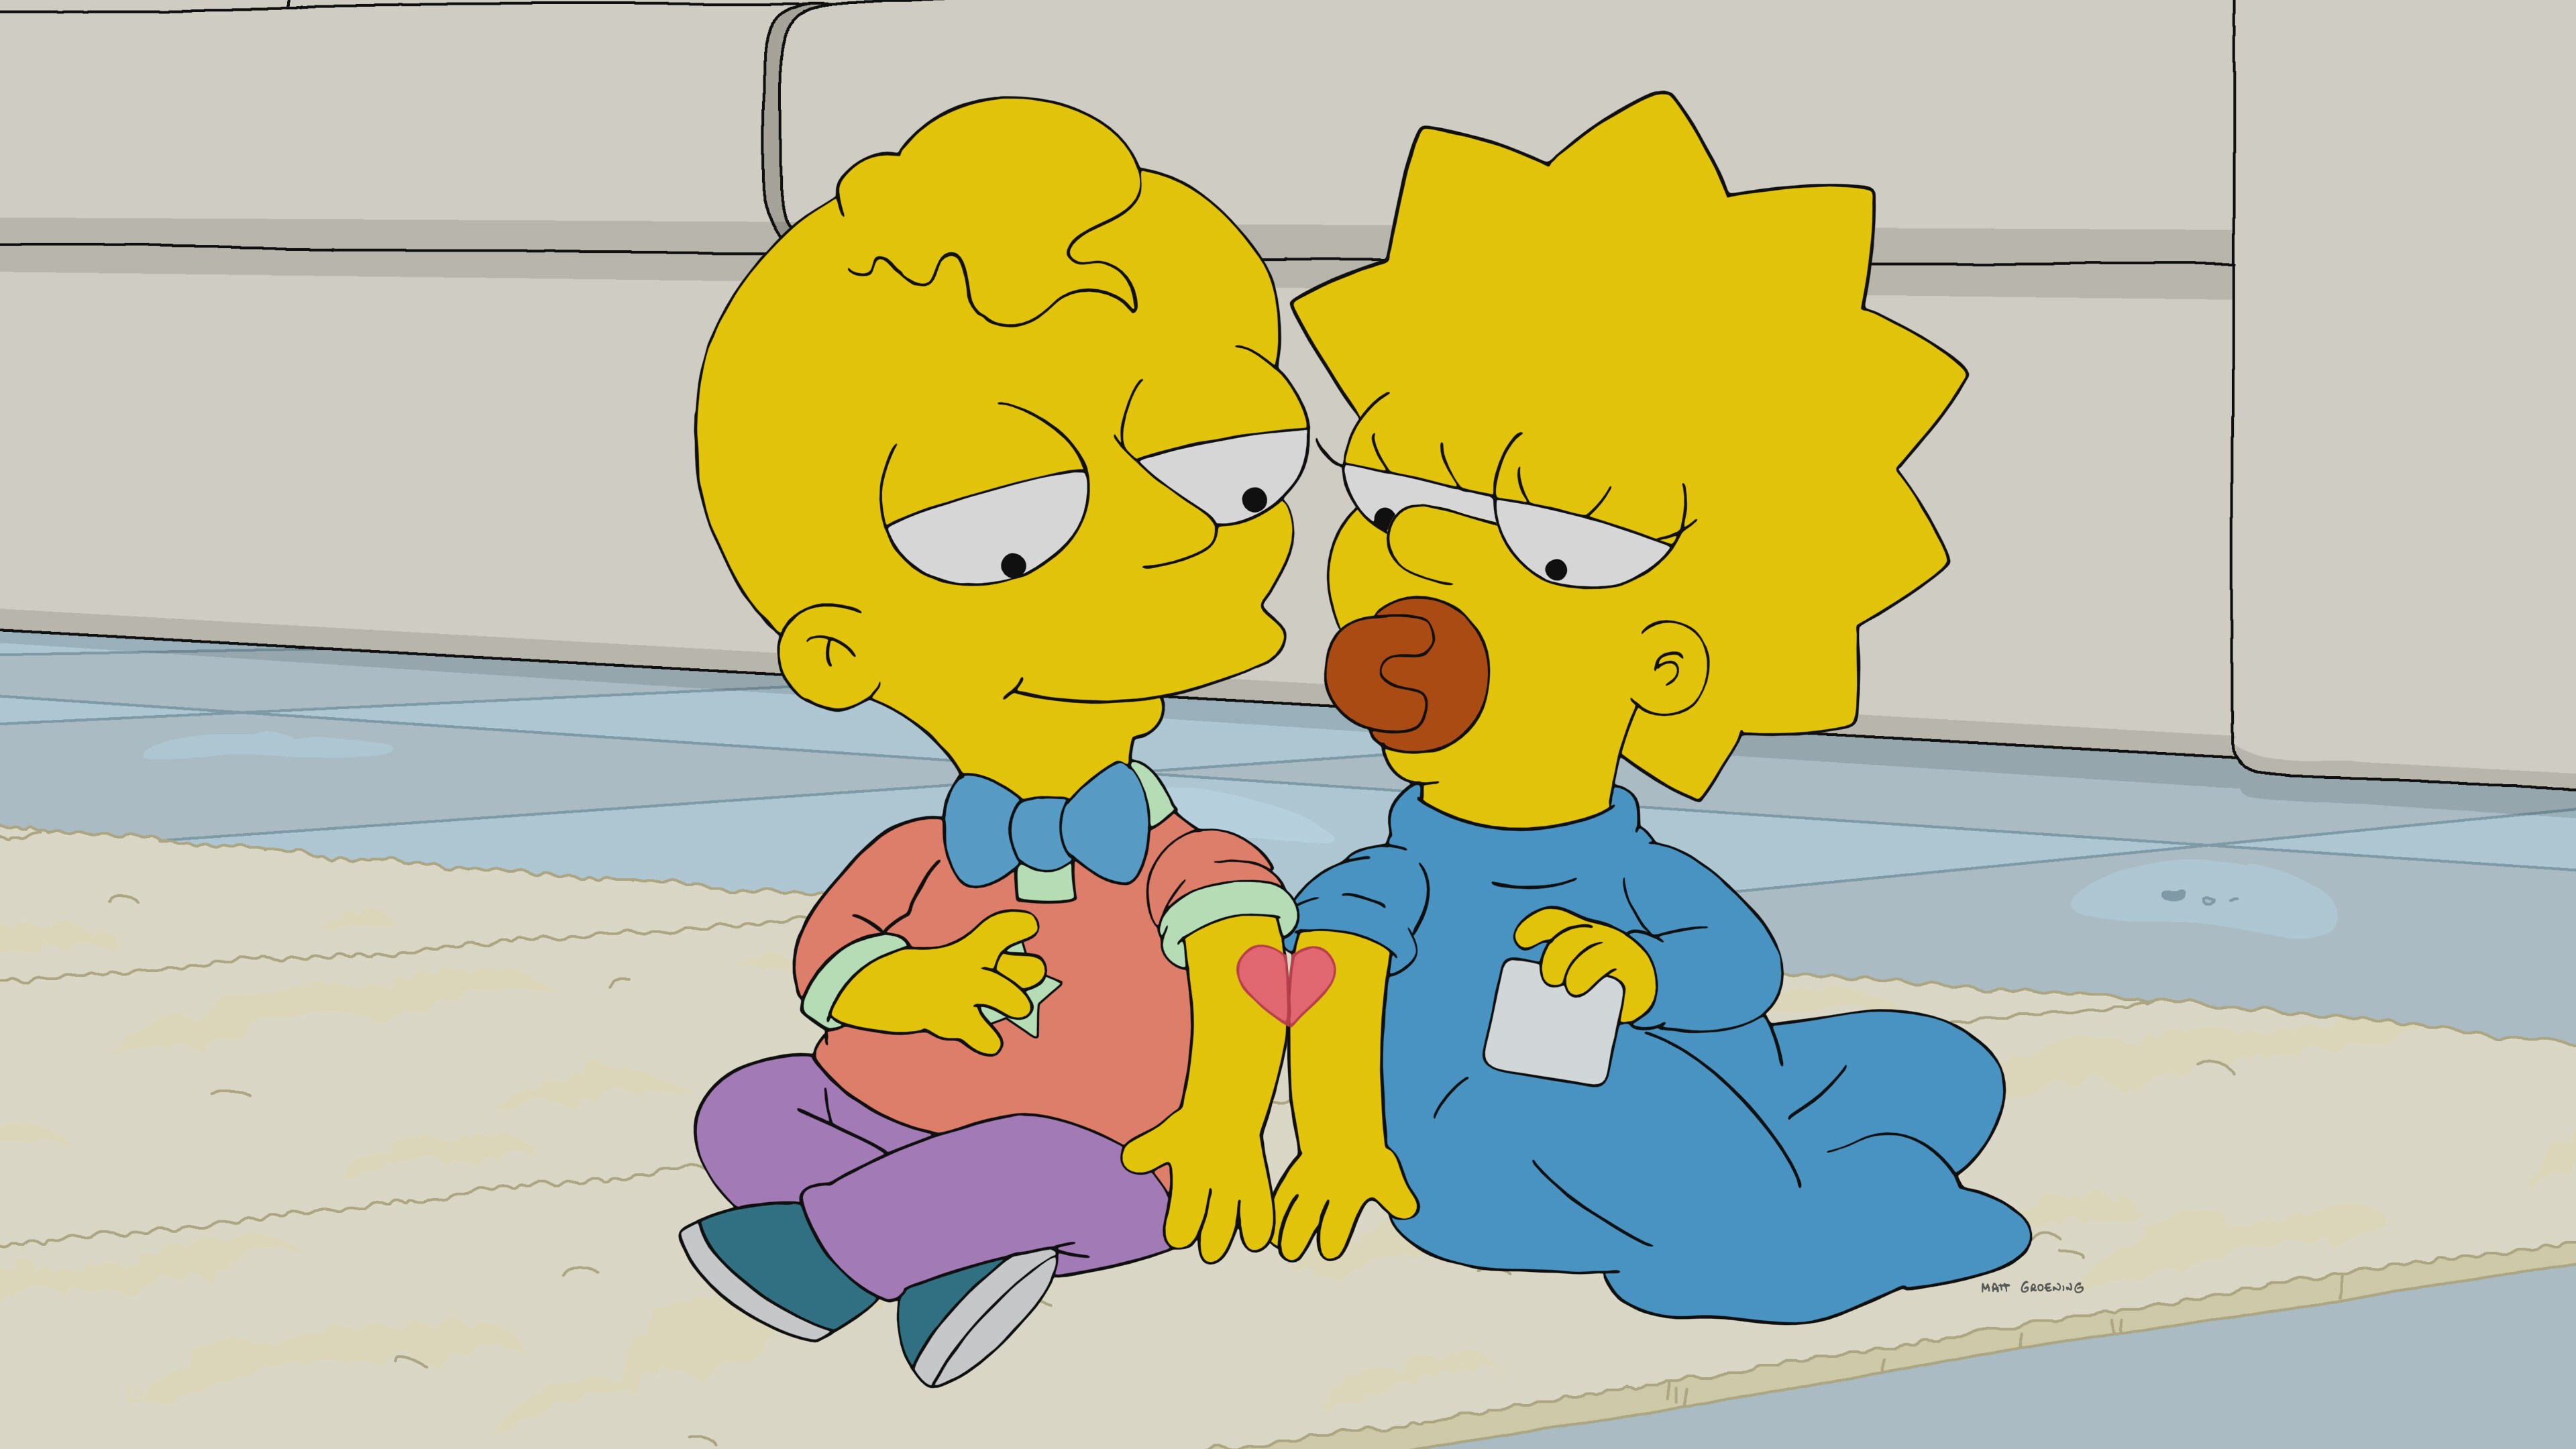 Cannibal Simpsons Porn - The Simpsons Season 31 Images | Disney Plus Press